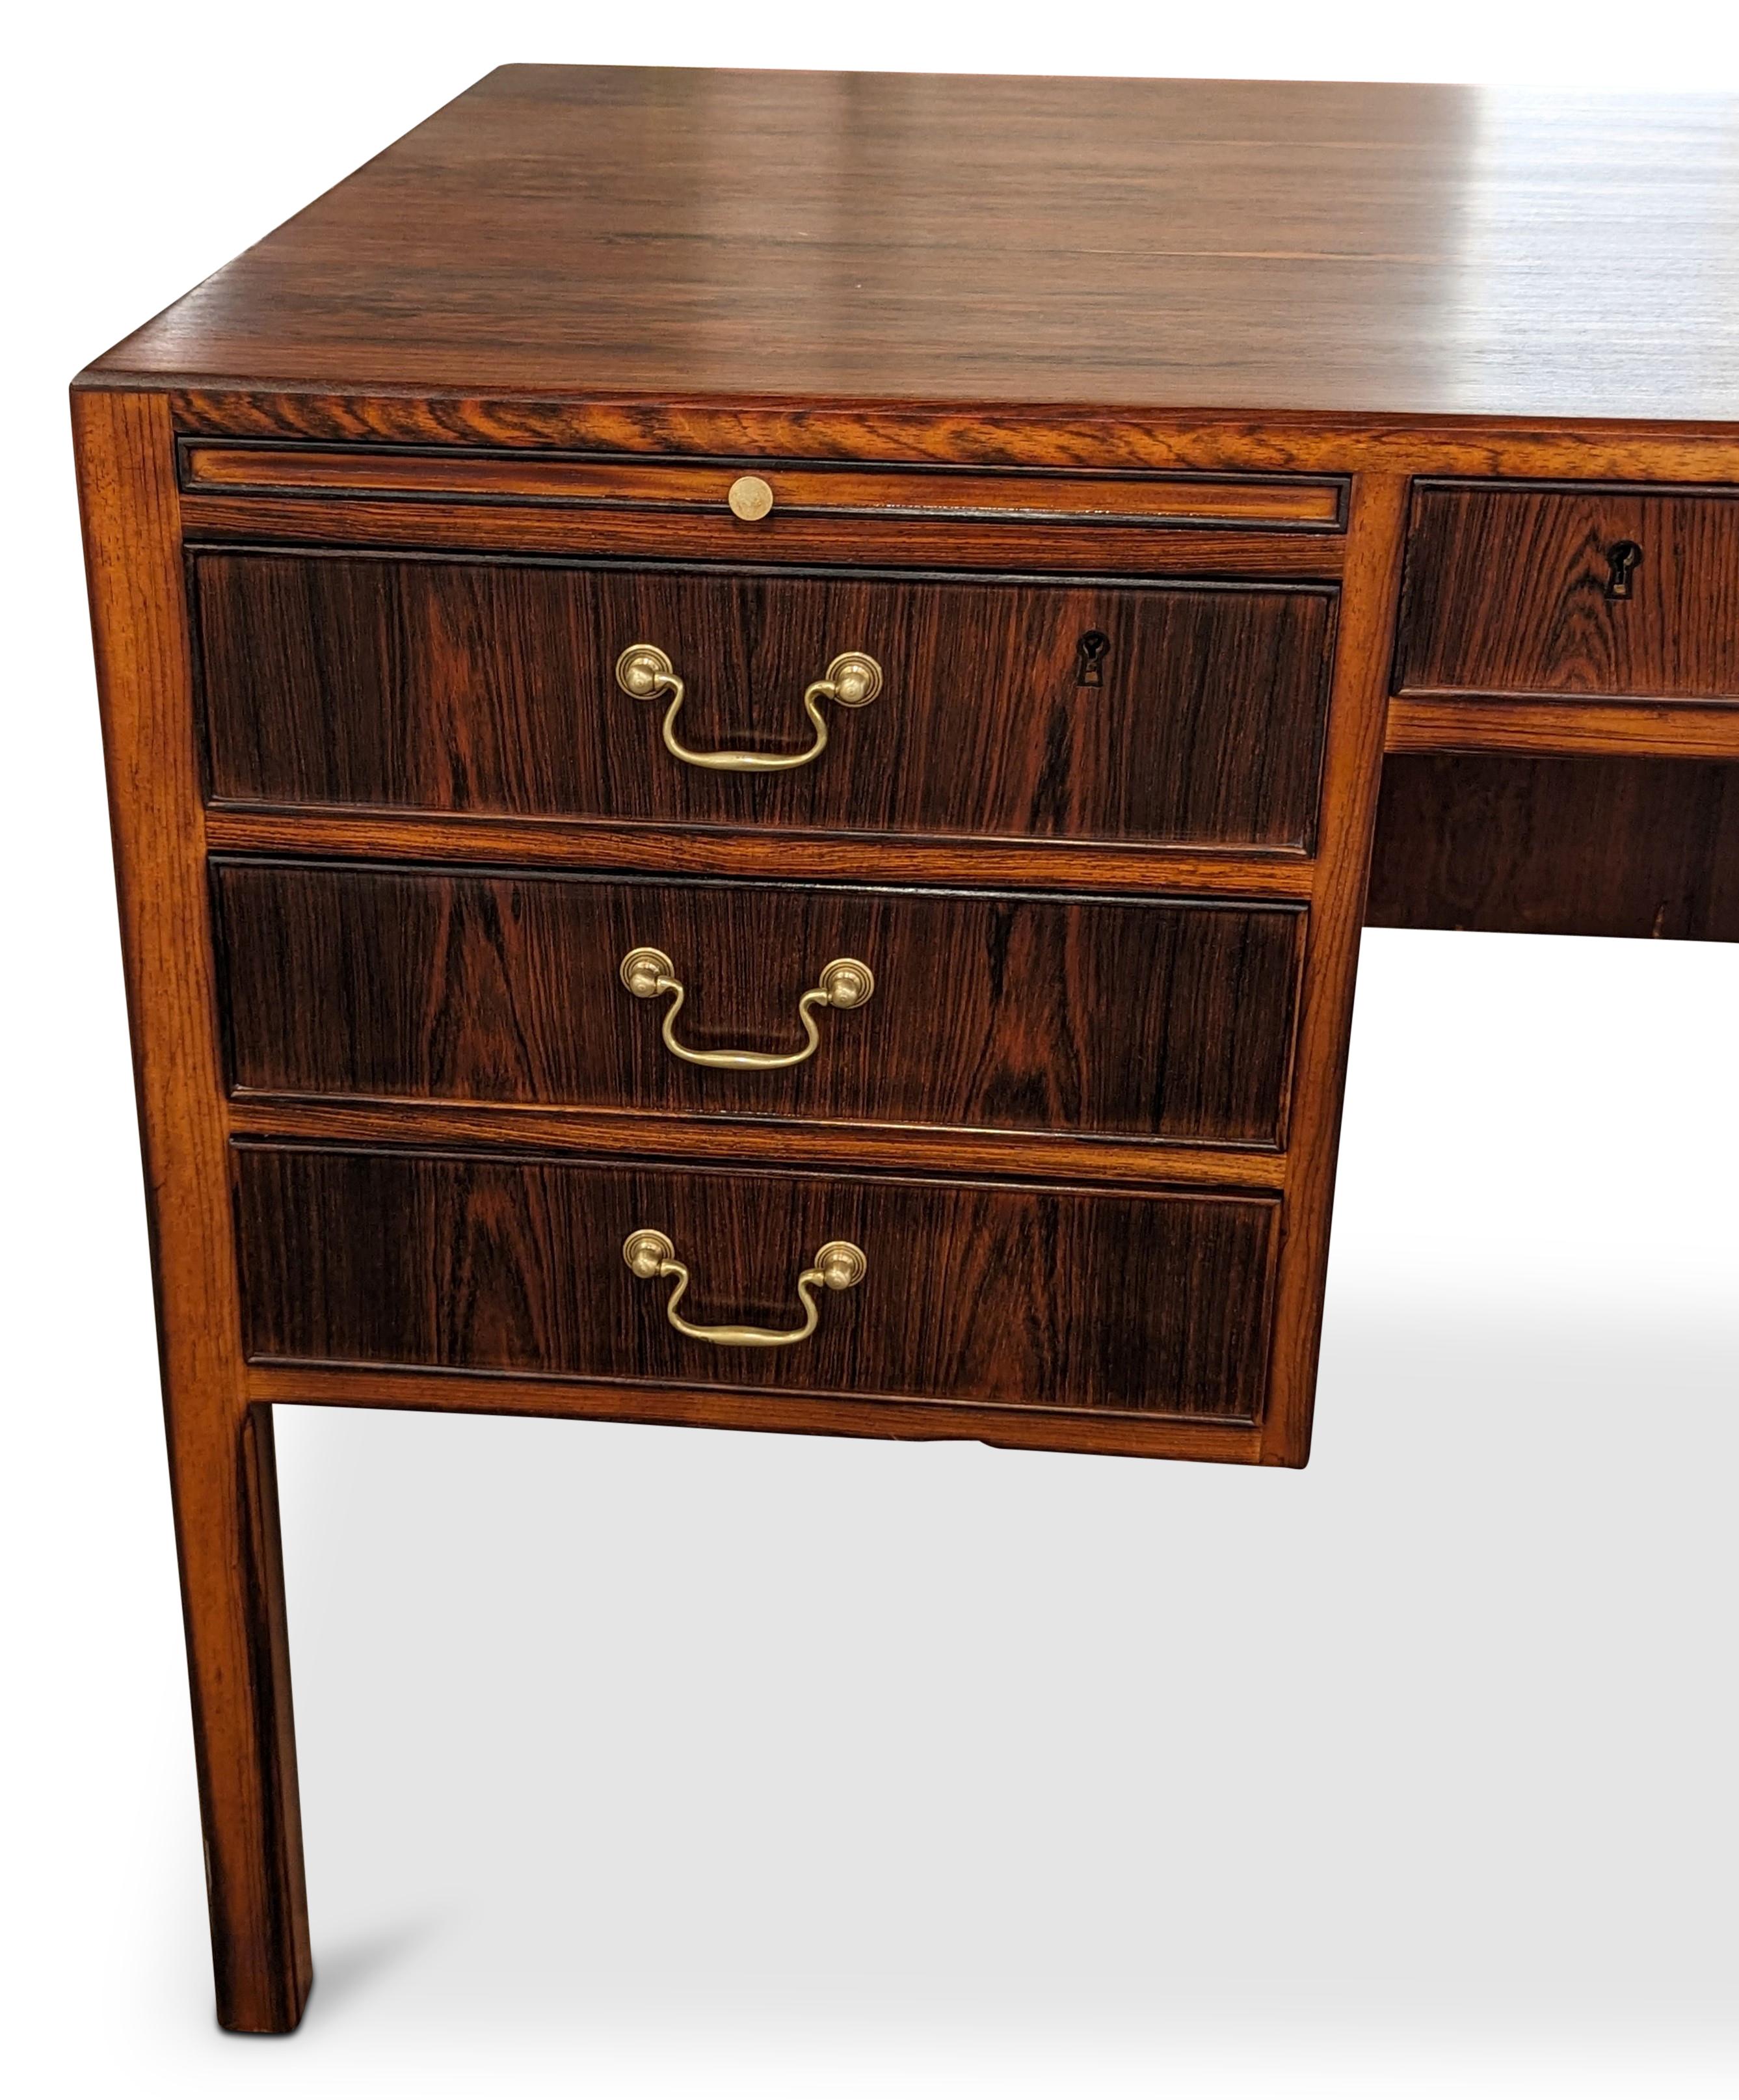 Ole Wancher Rosewood Desk - 0823177 Vintage Danish Mid Century For Sale 1